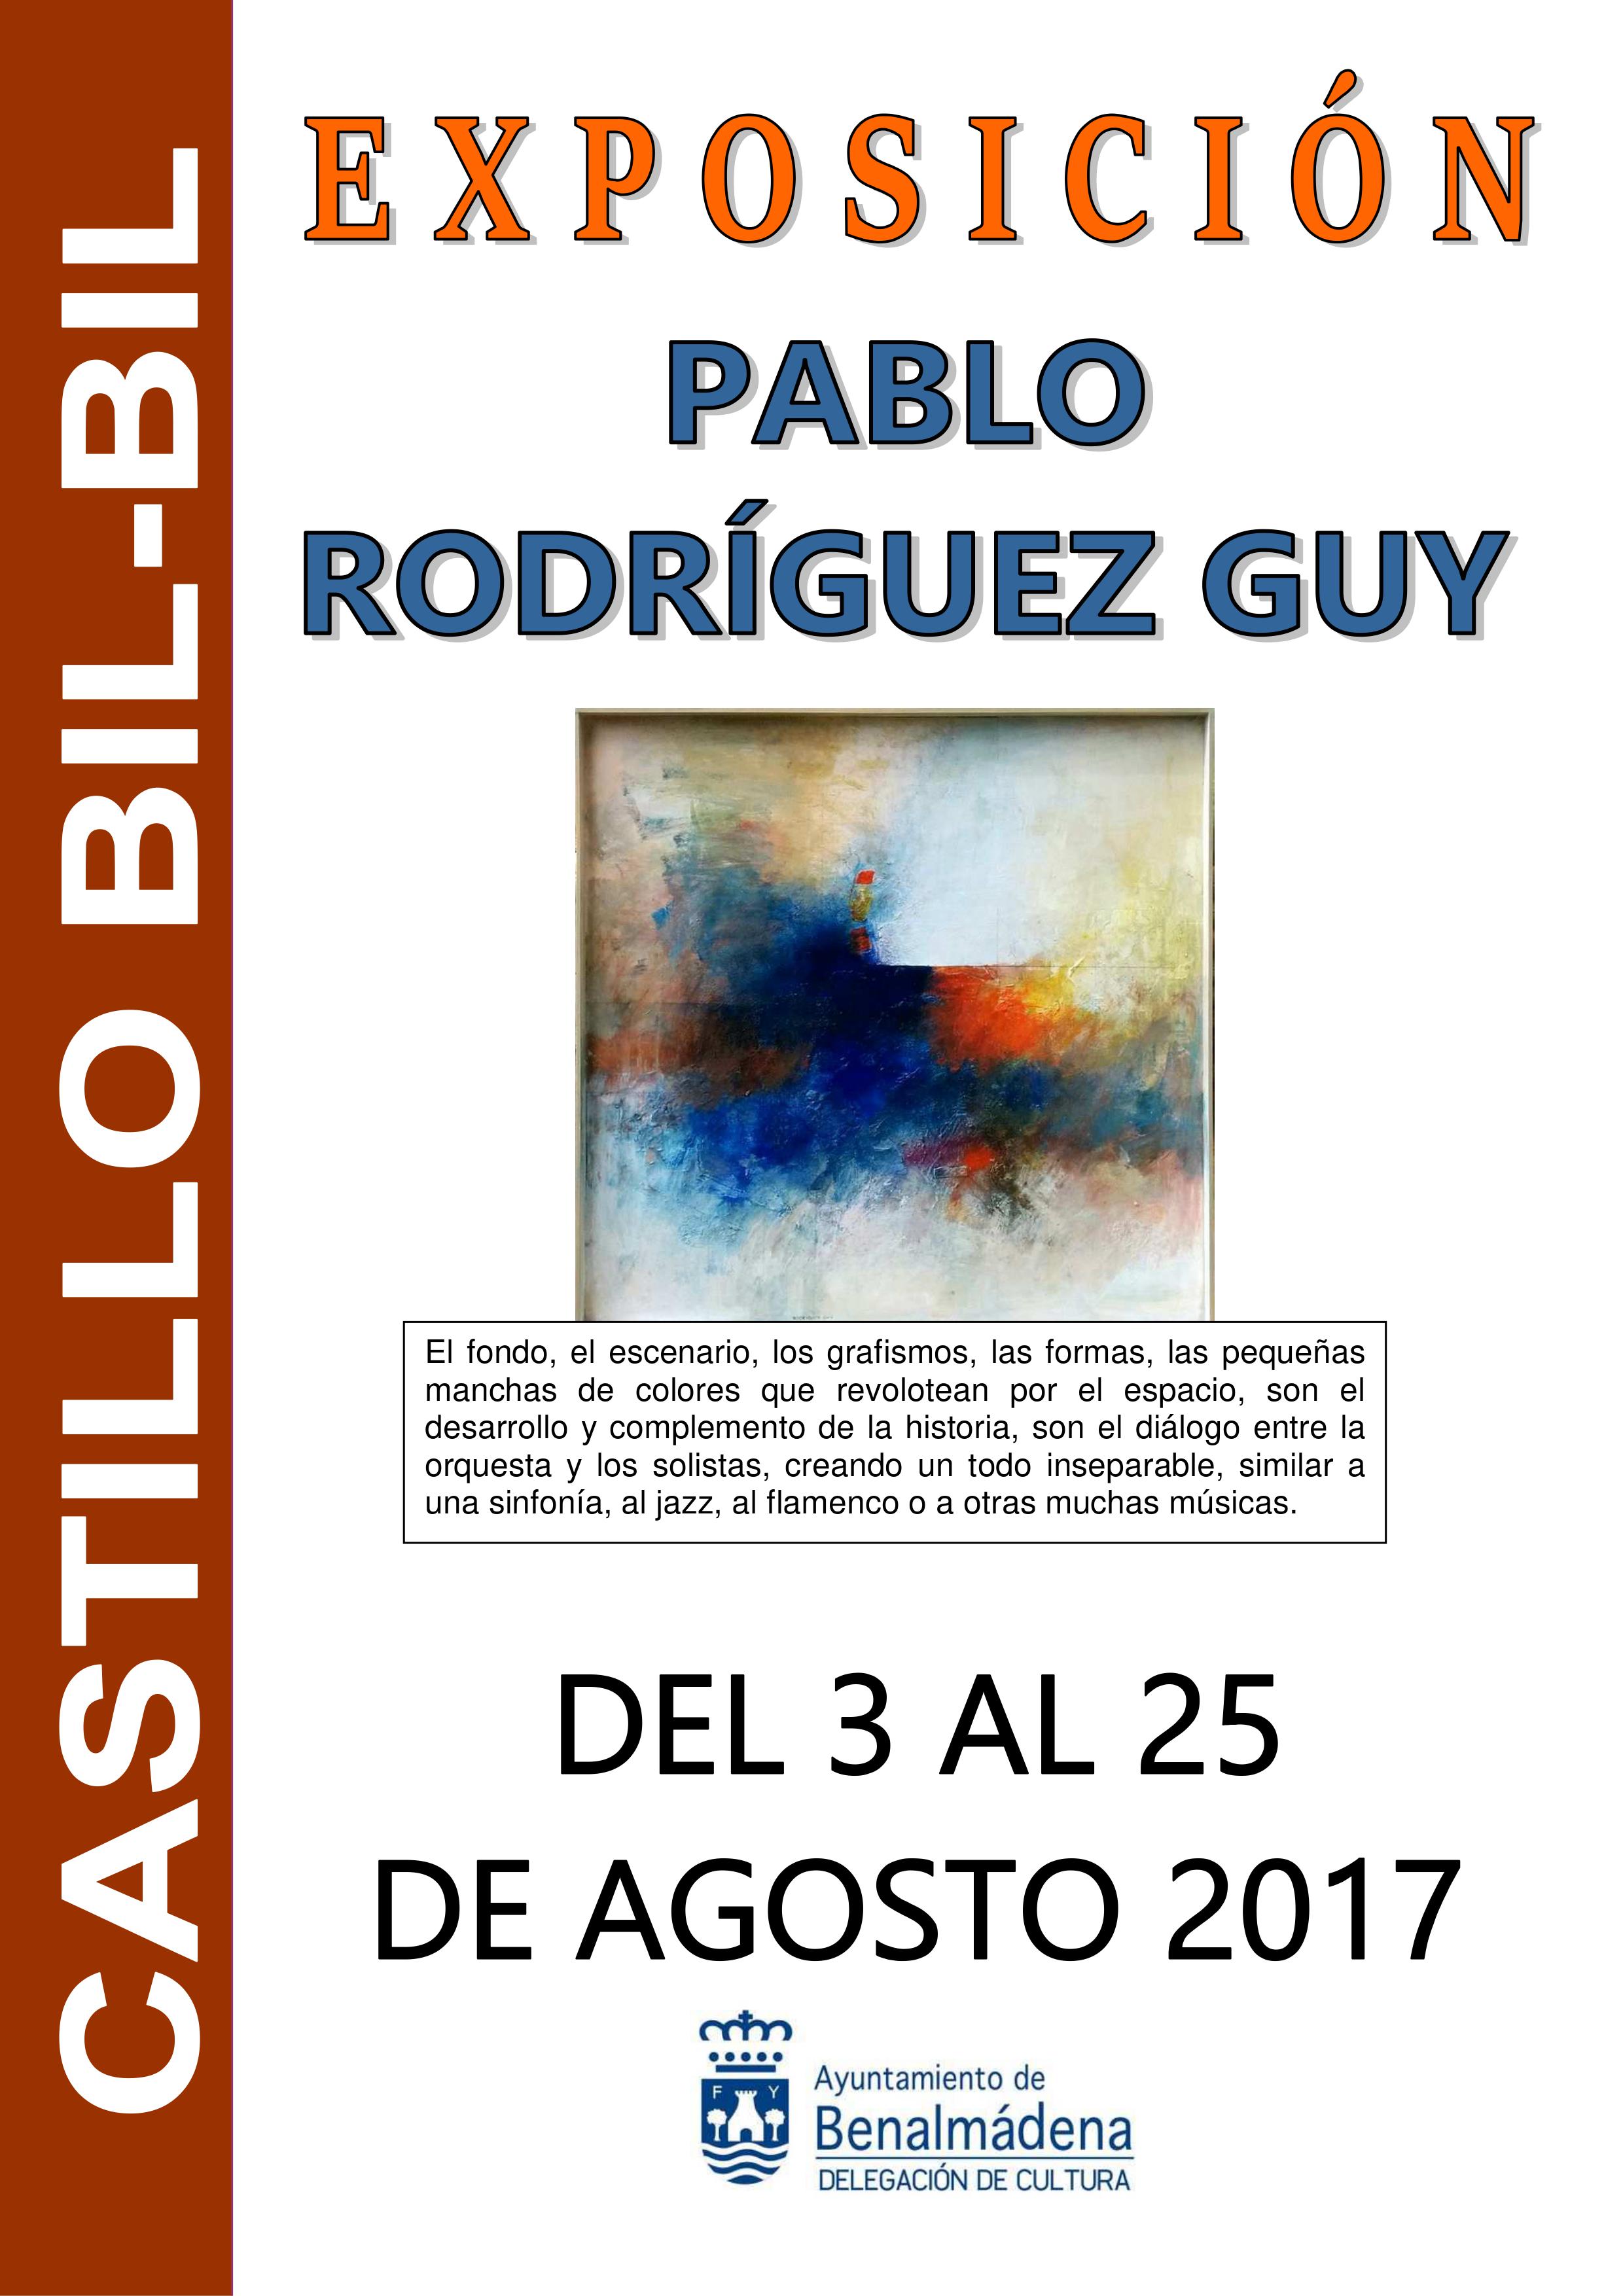 Pablo Rodríguez Guy